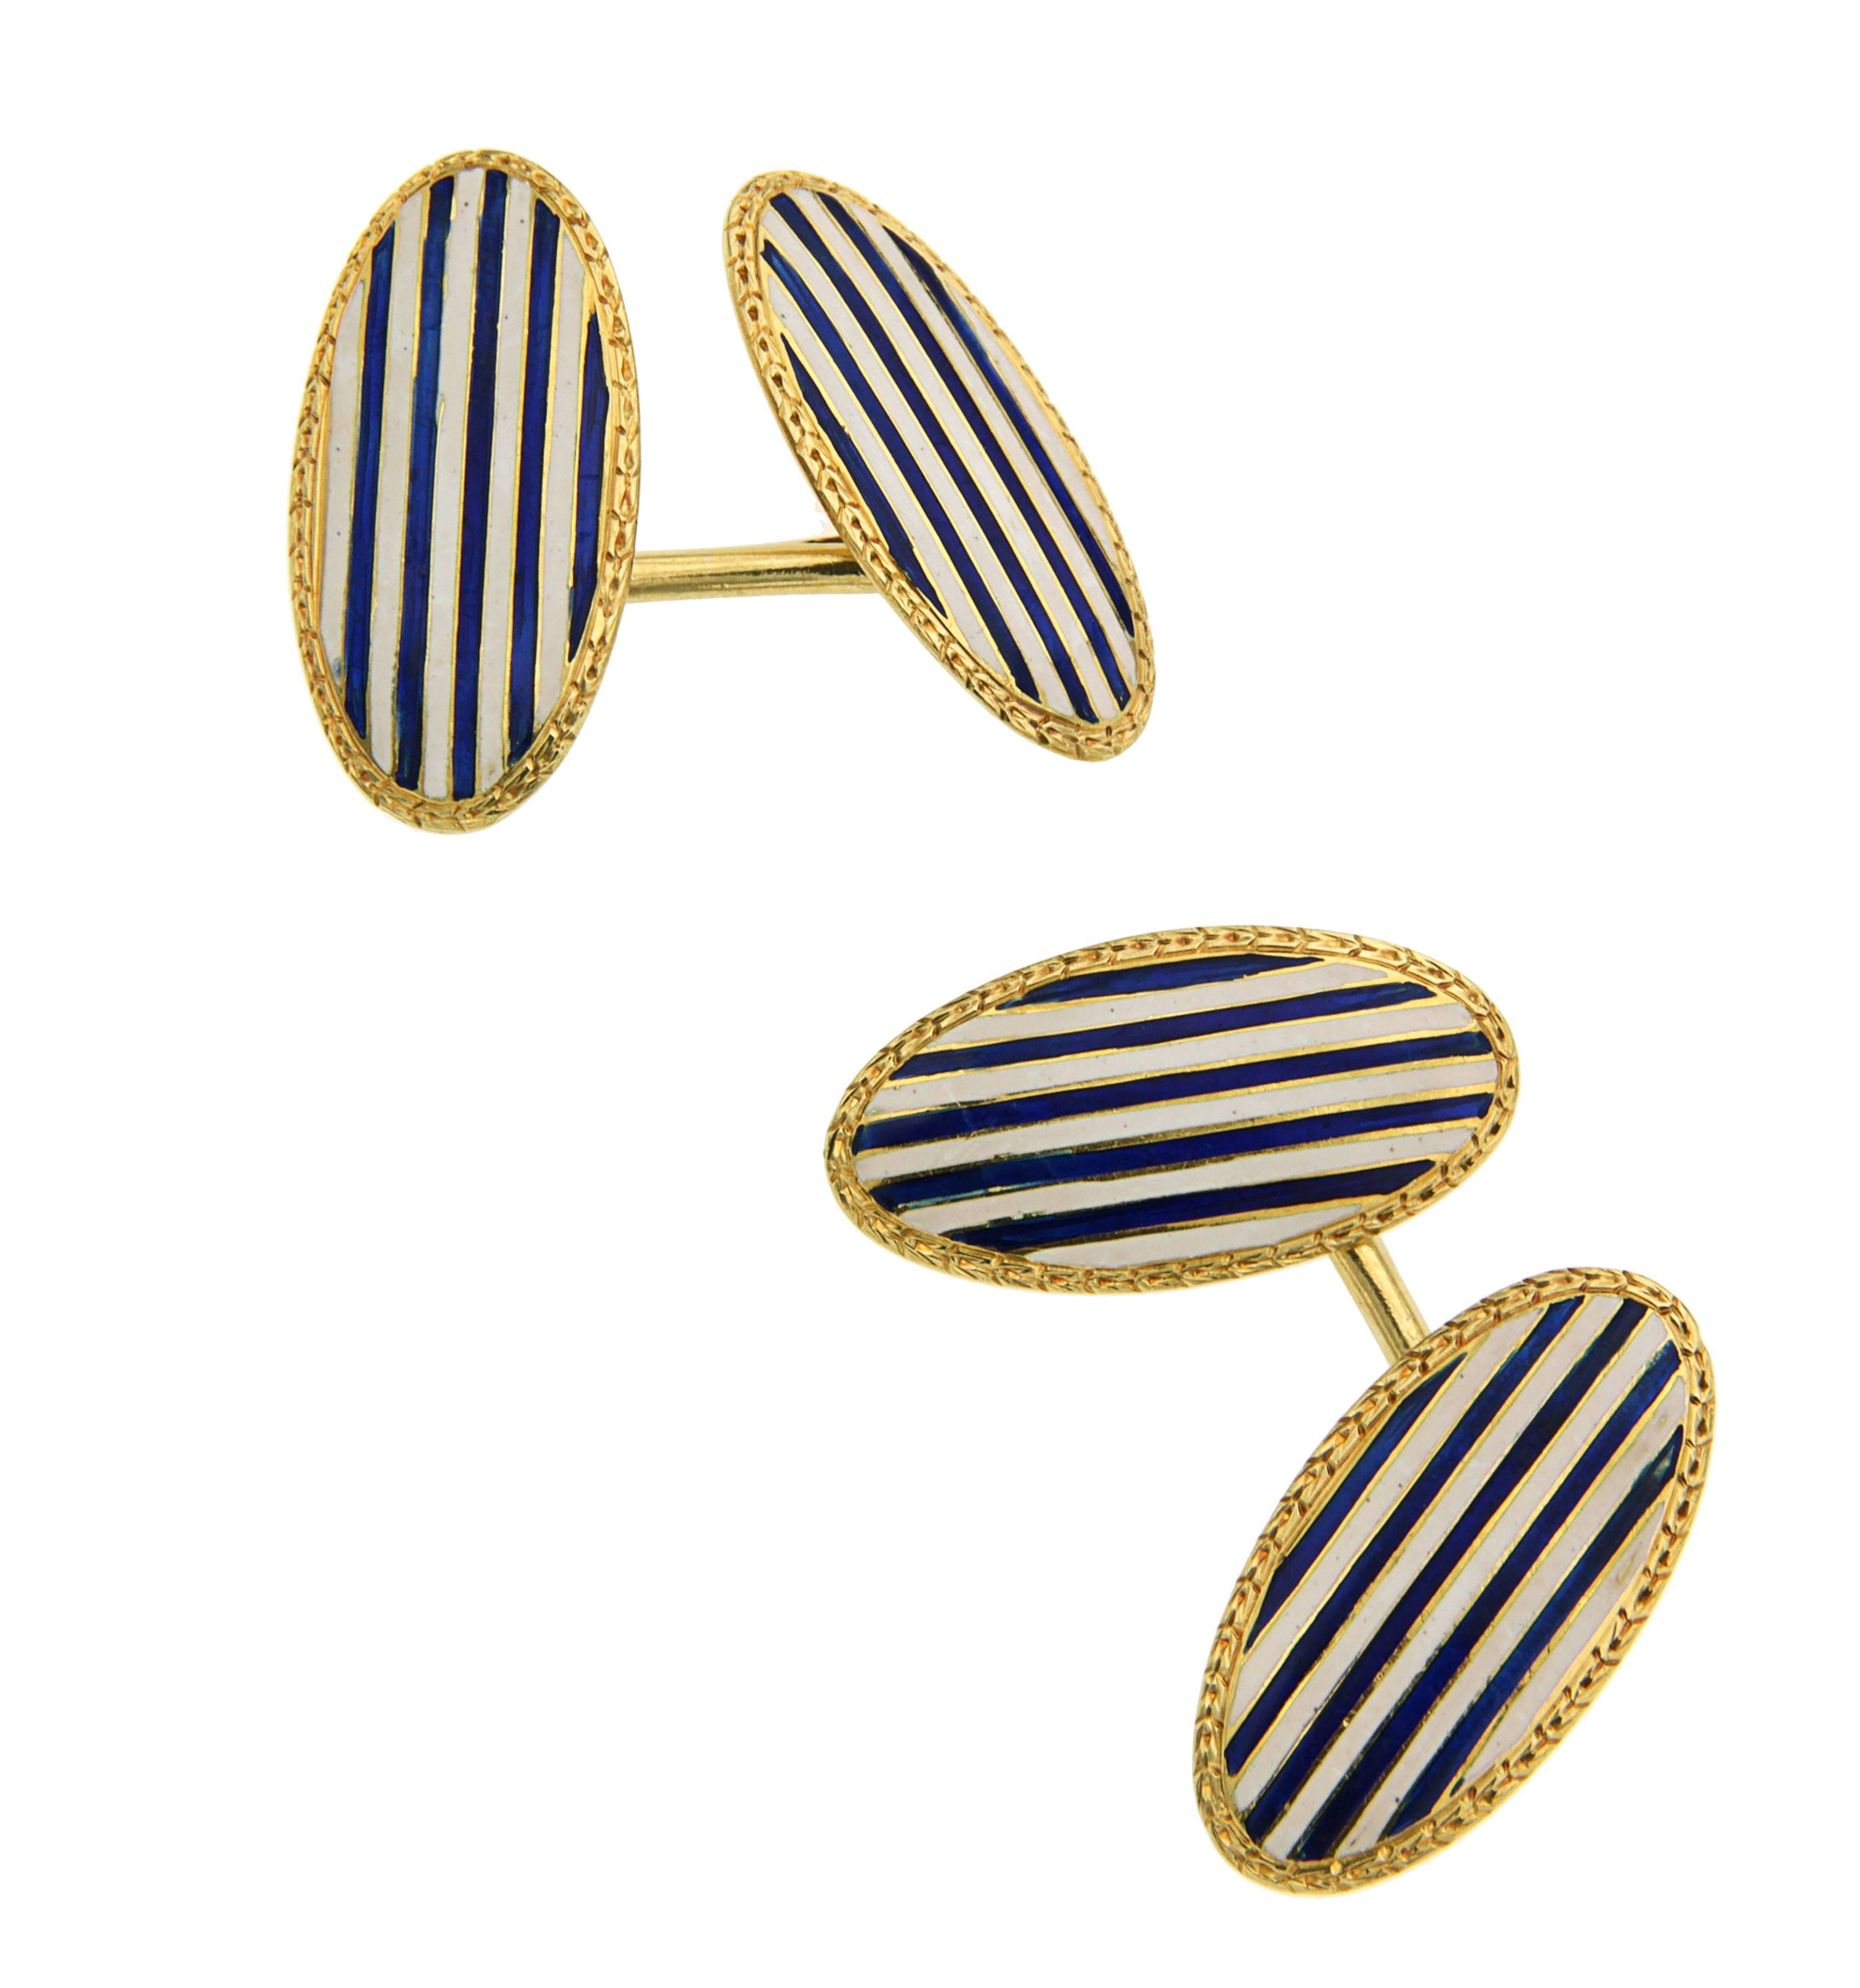 18k gold oval shaped enamel cufflinks 

ovals are 25 mm X 12 mm